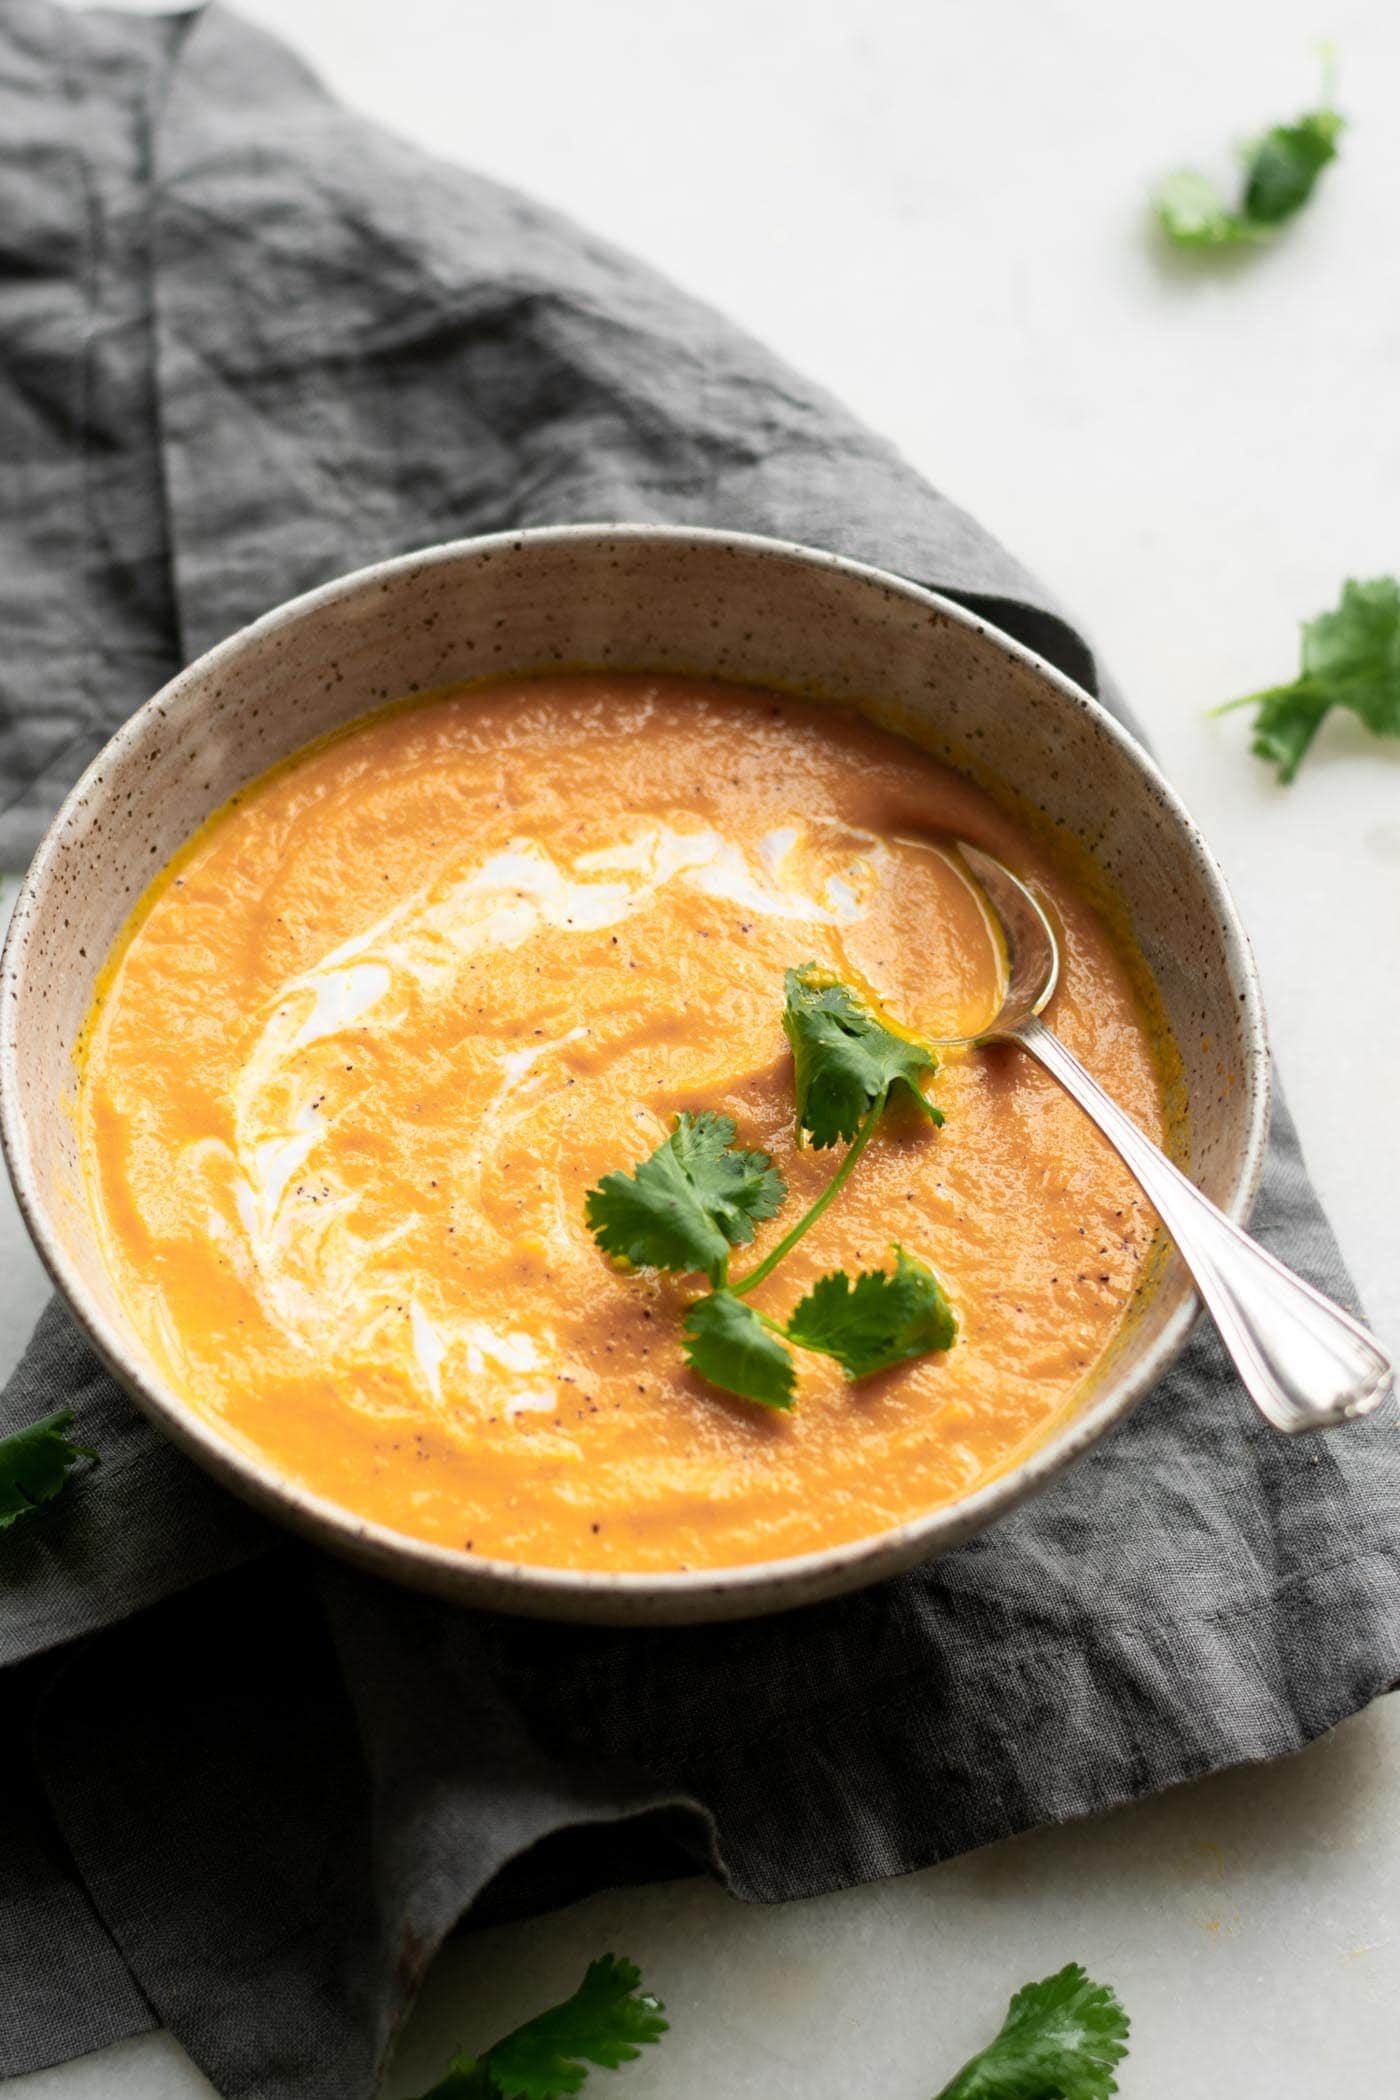 https://runningonrealfood.com/wp-content/uploads/2015/09/creamy-vegan-coconut-ginger-carrot-soup-running-on-real-food-16.jpg